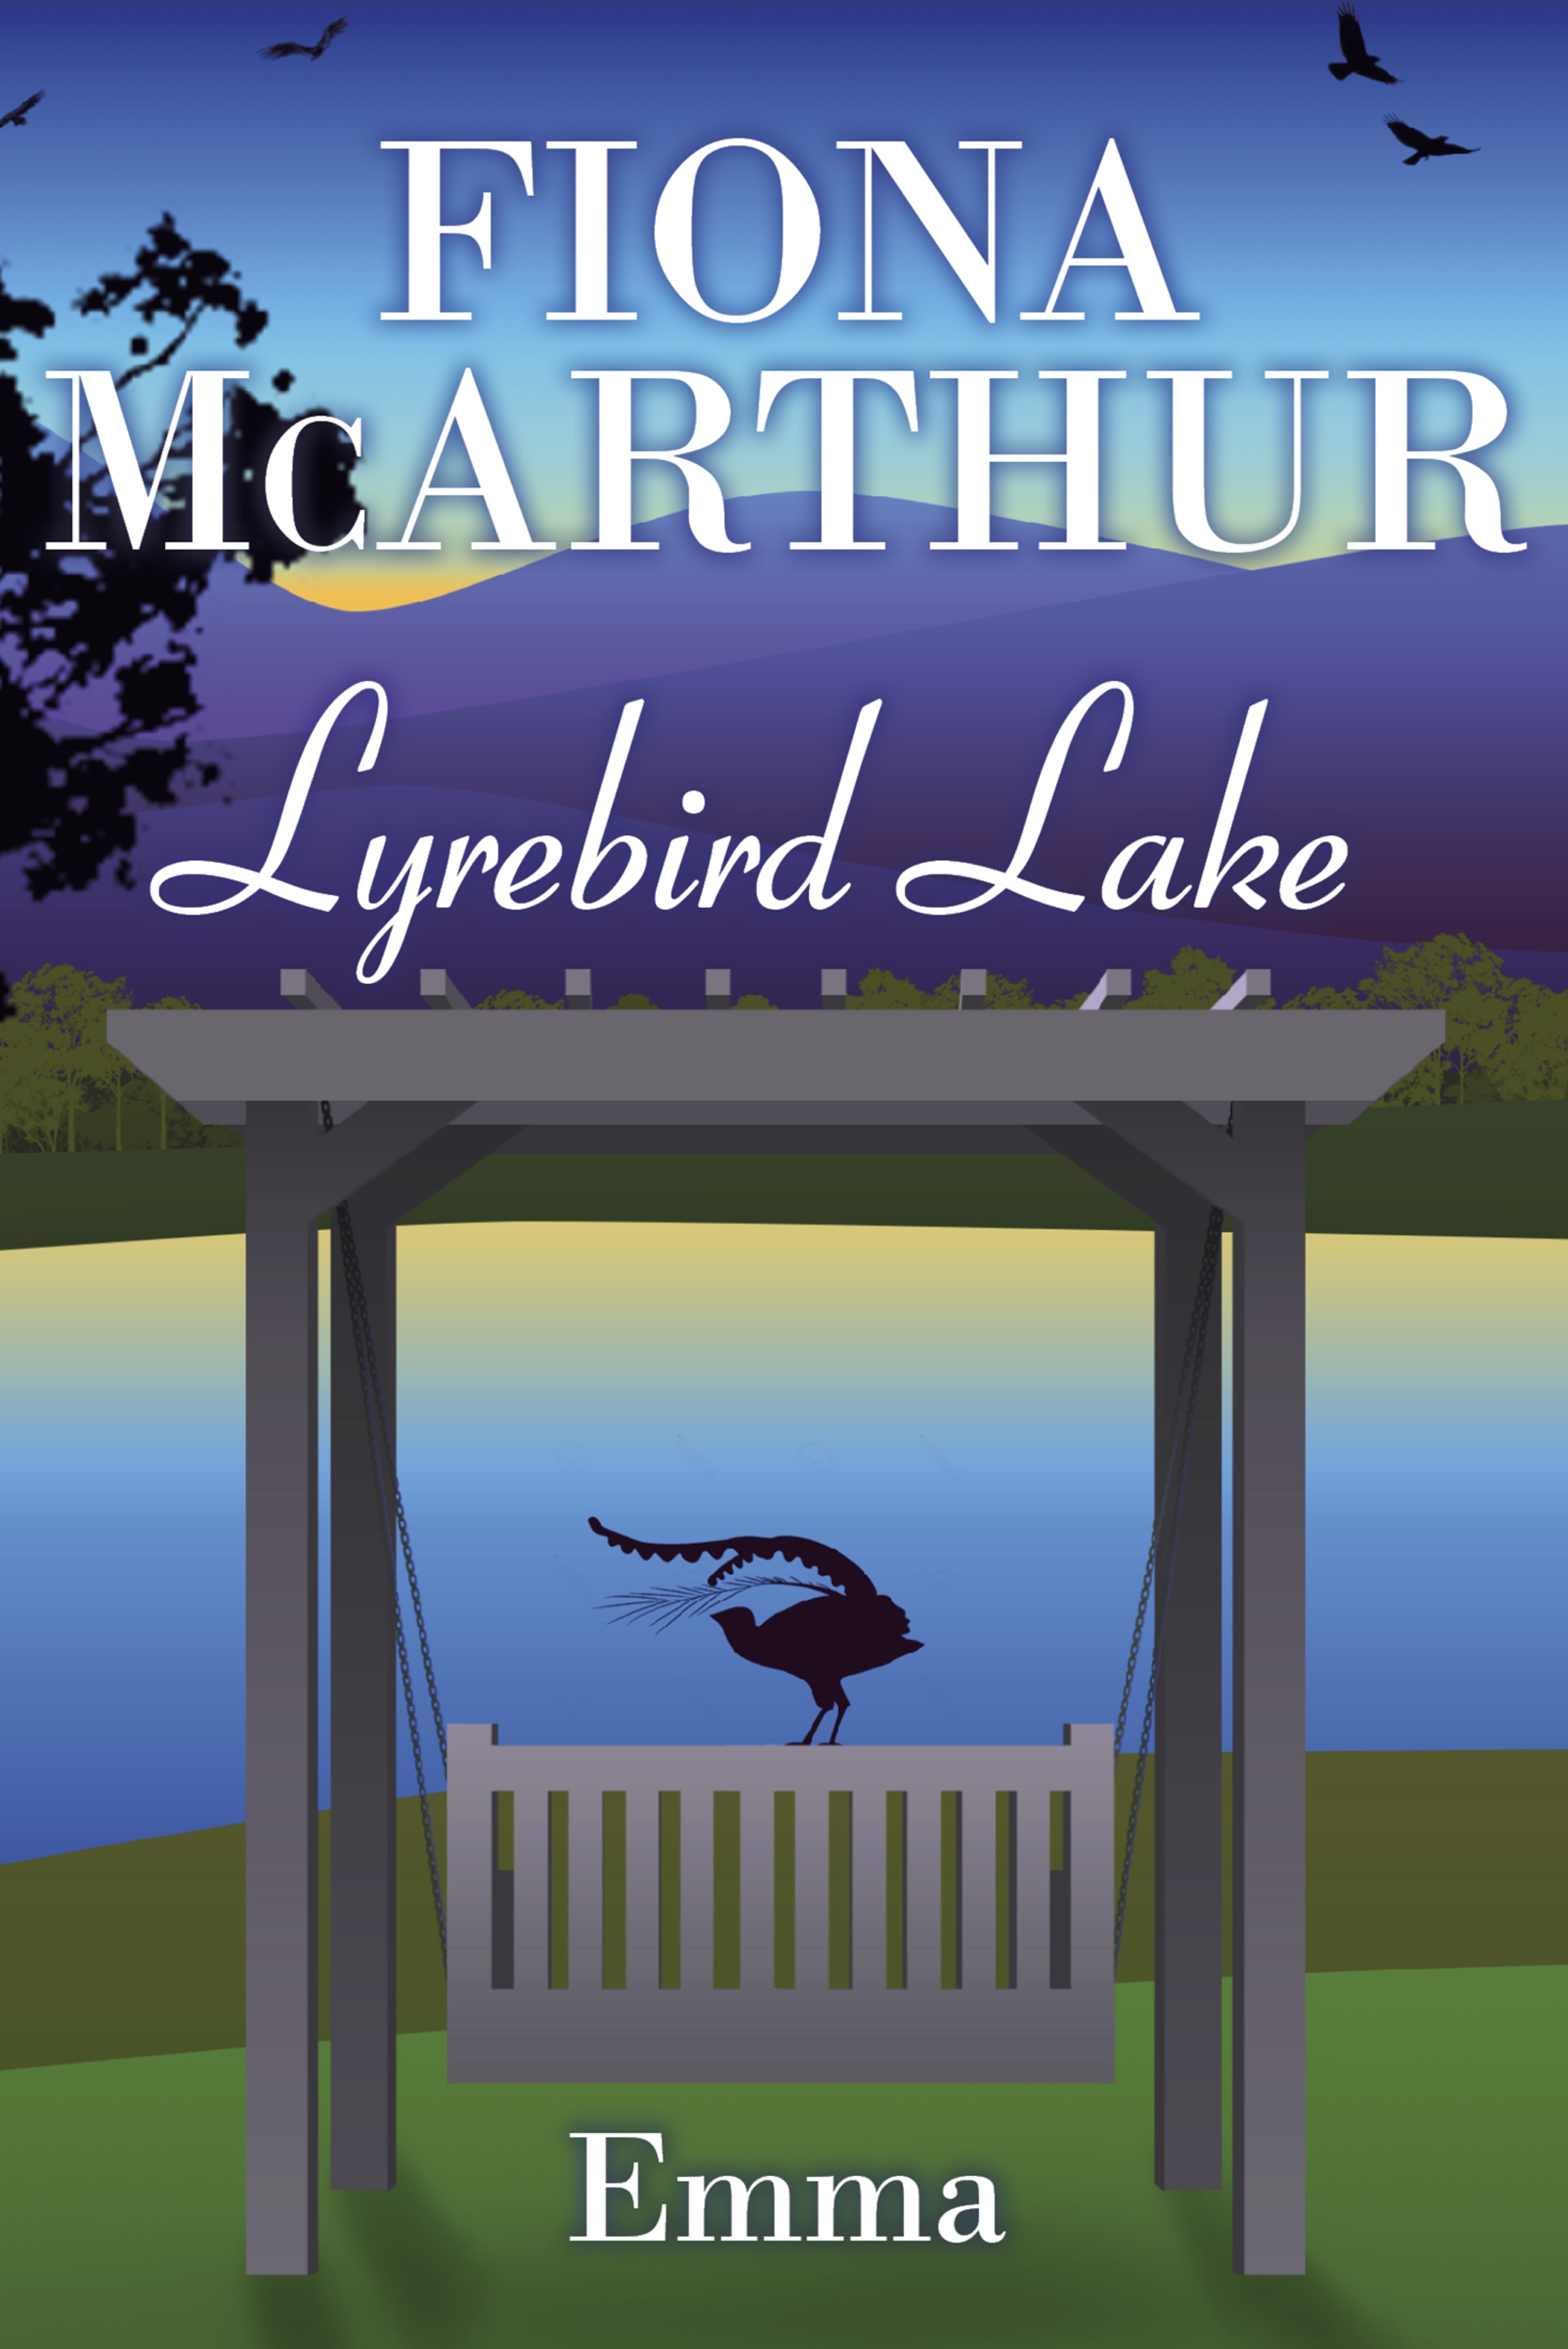 Lyrebird-Lake-FRONT-COVER-Book-04 copy 2